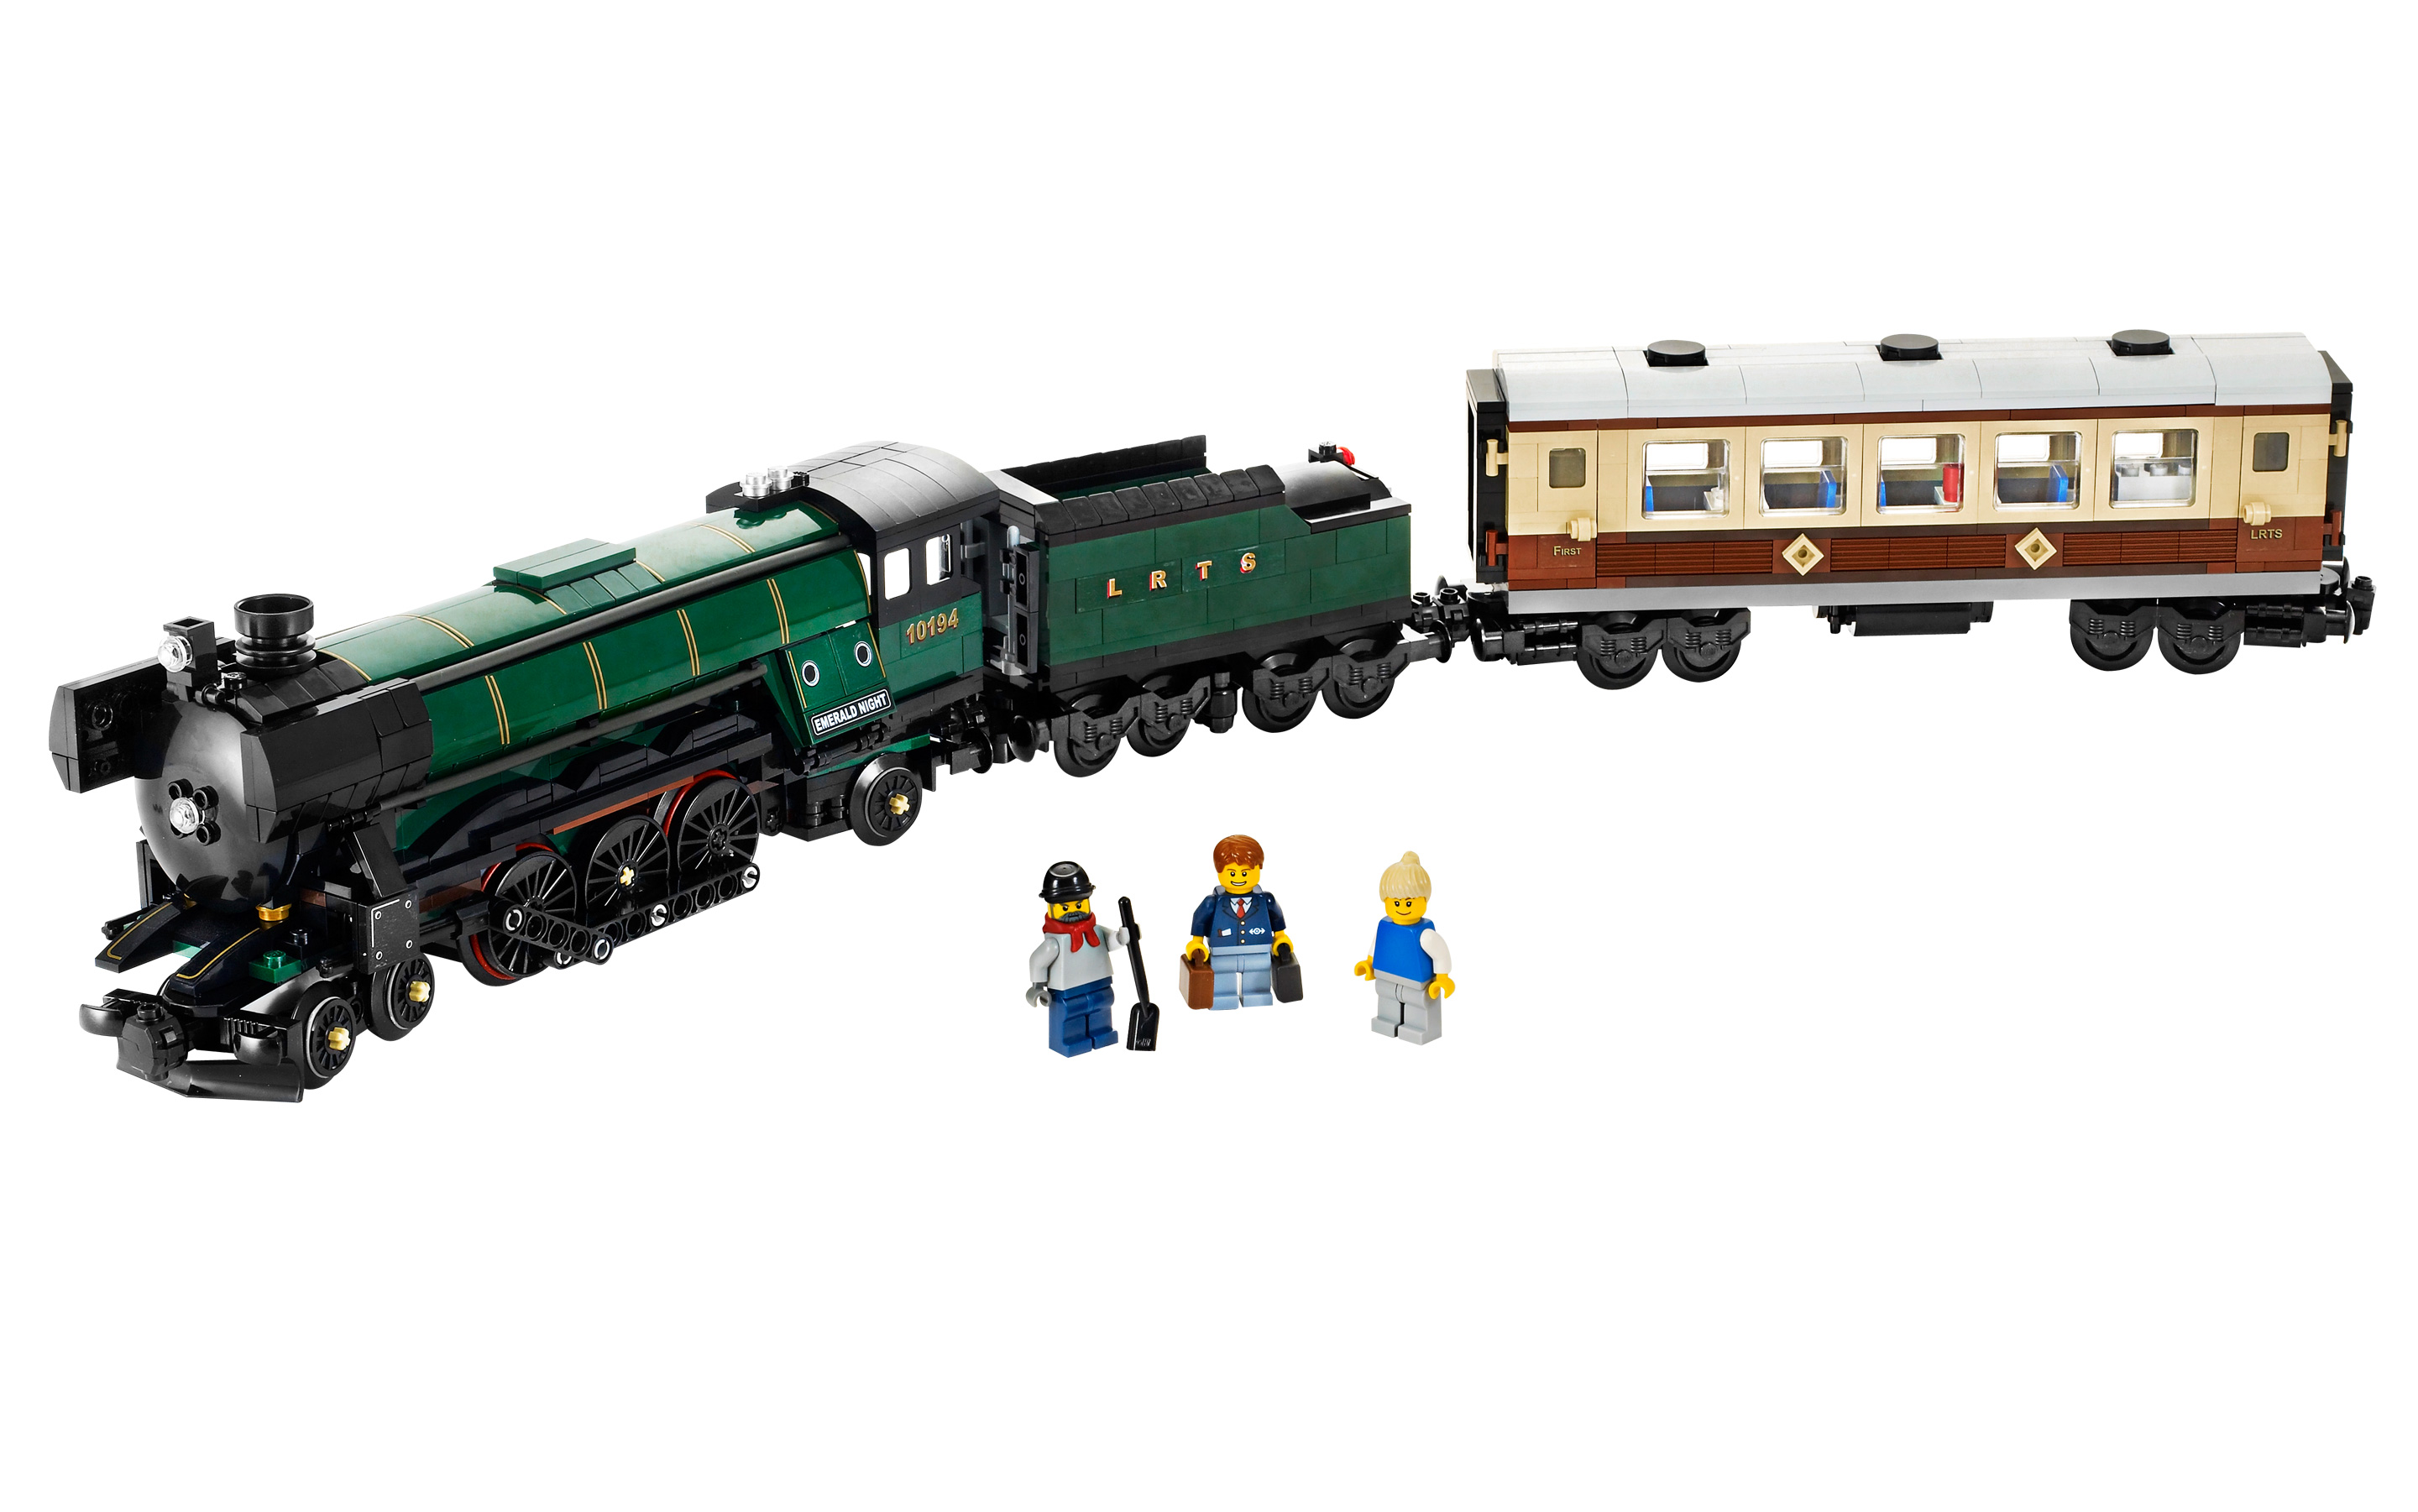 Emerald Night 10194 New Custom Built Train Caboose Built w/ New Lego Bricks 